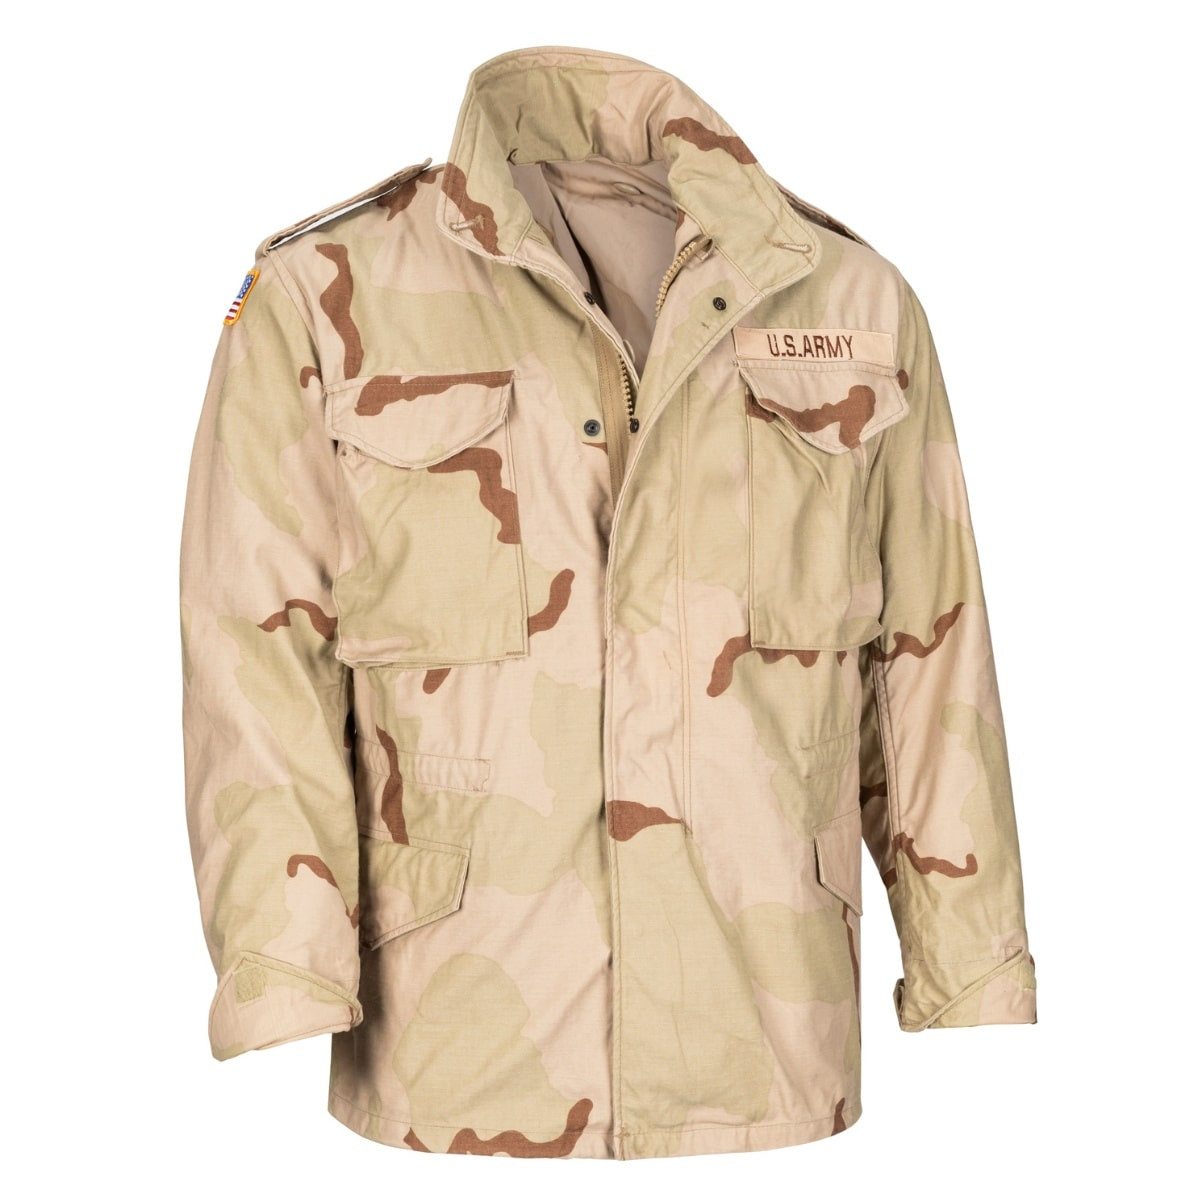 Desert camouflage jacket